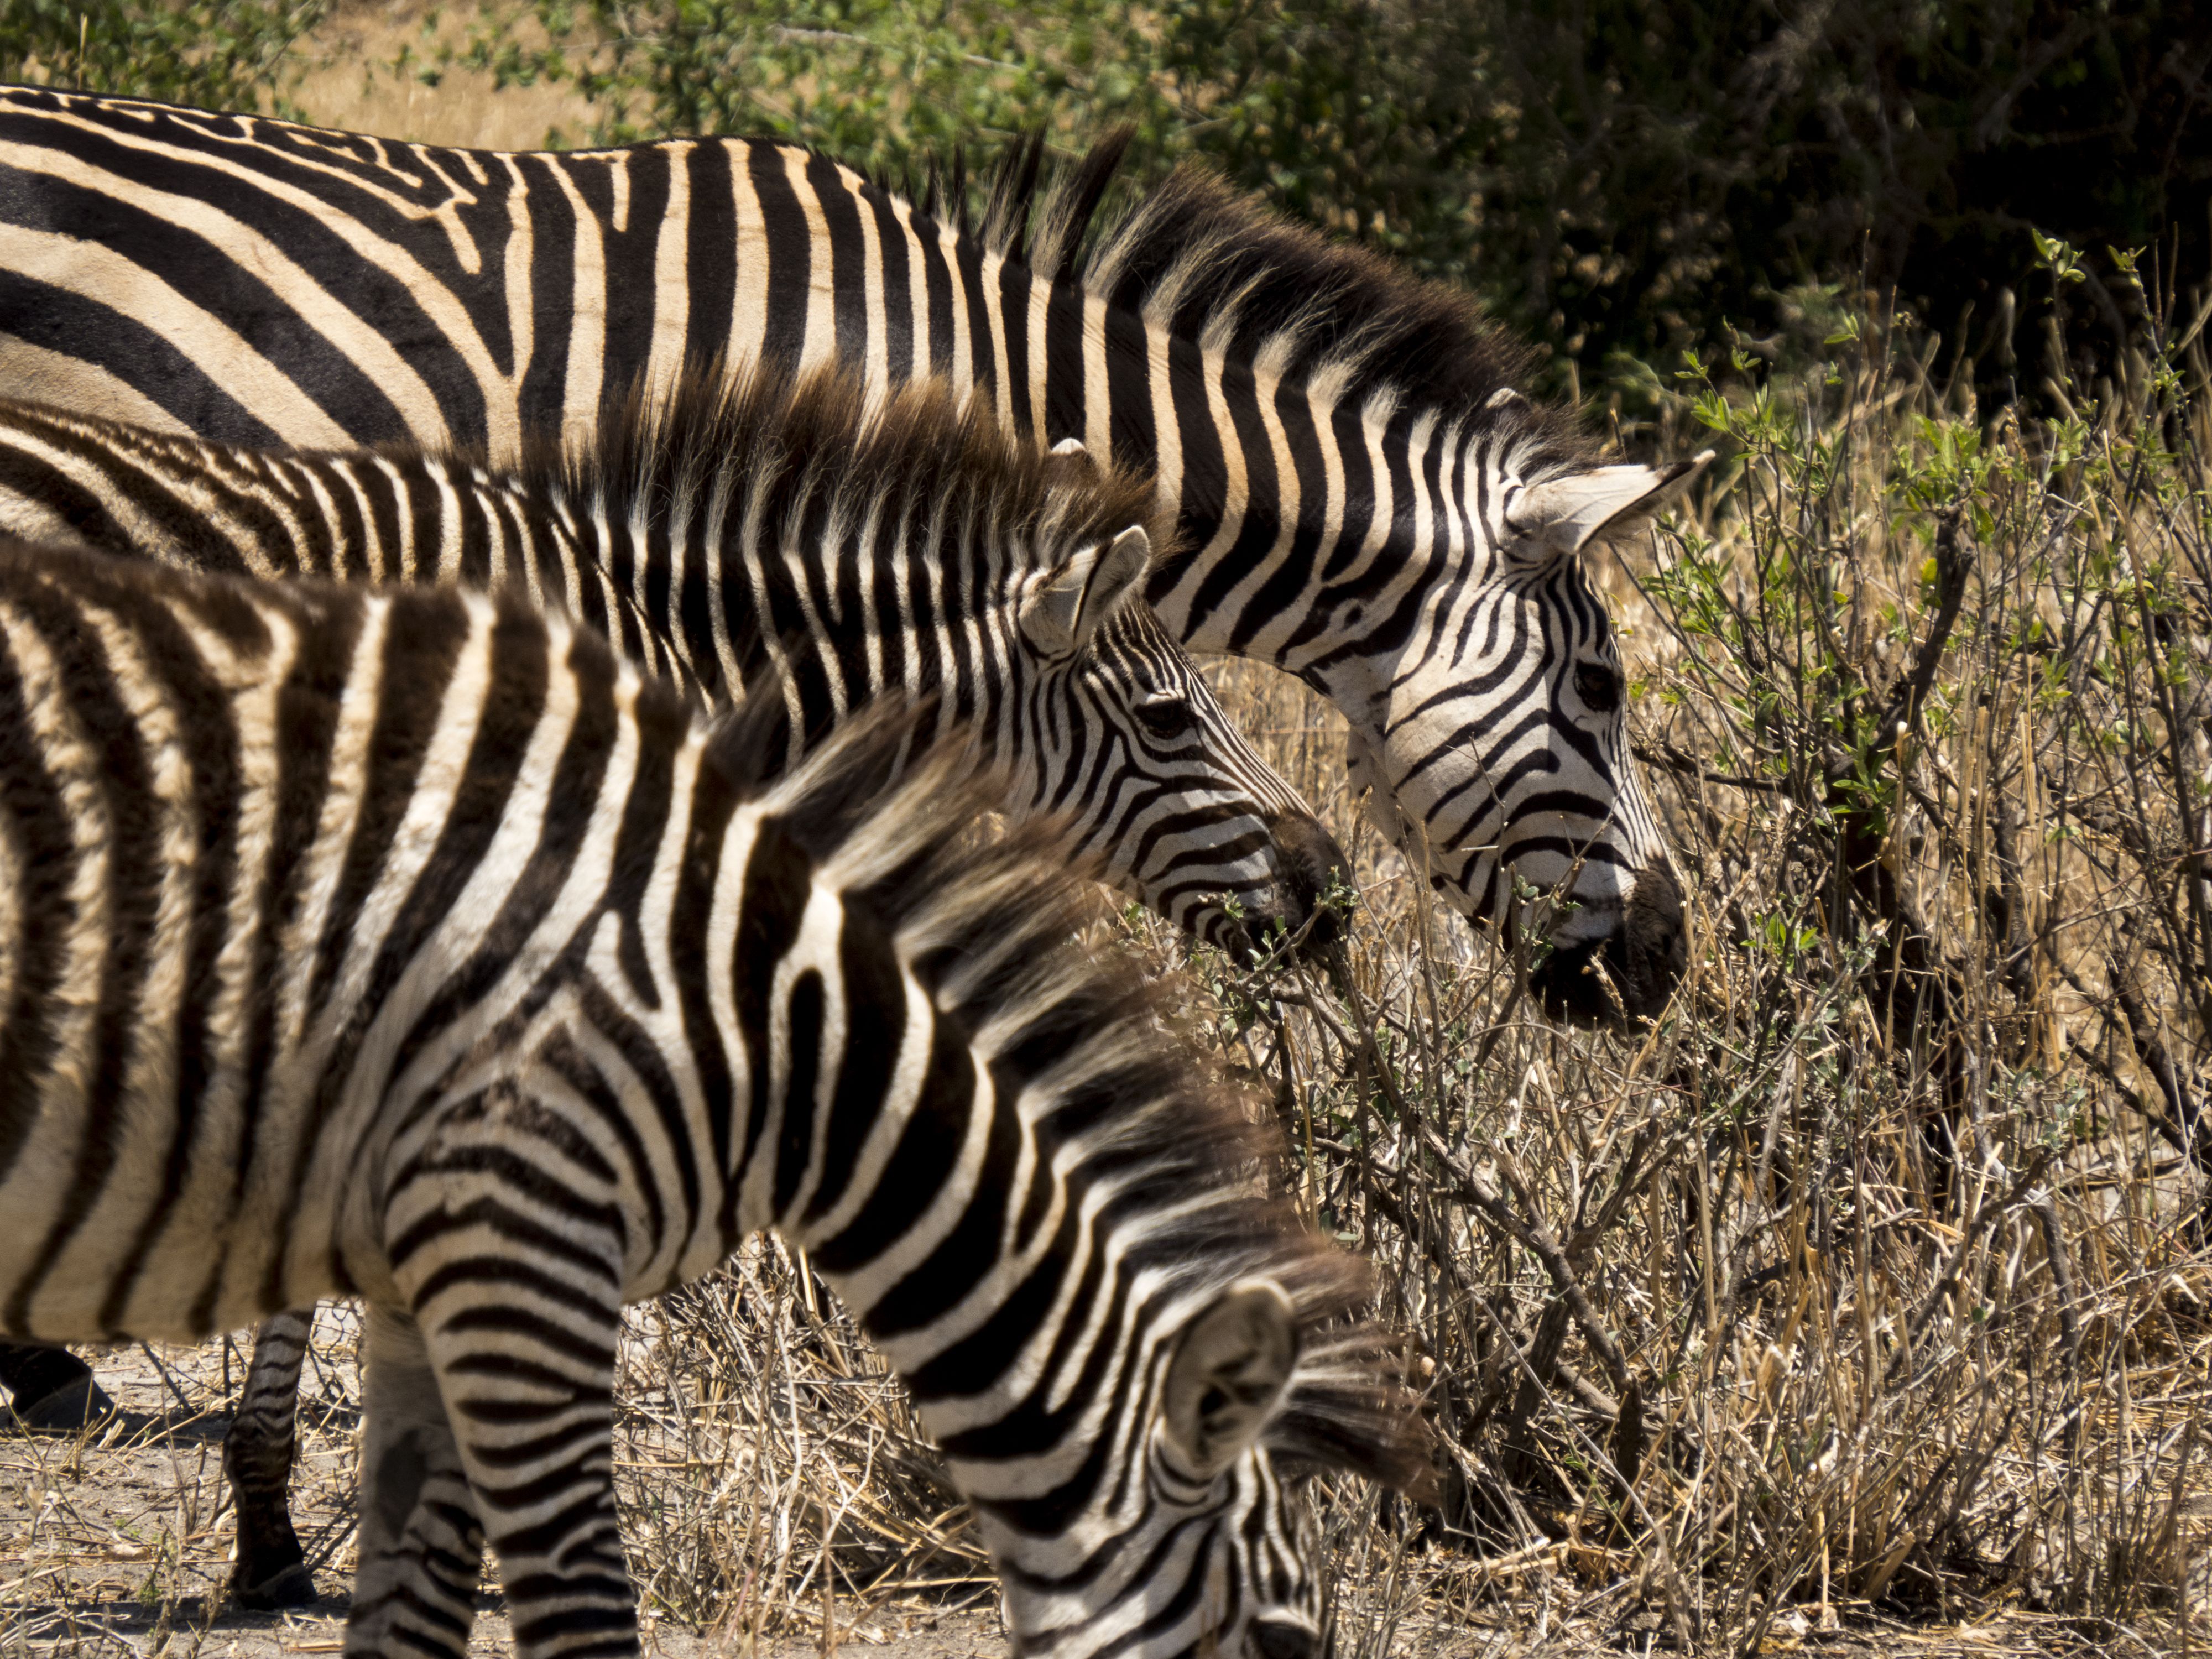 Wild zebra 2 | My Photos | Pinterest